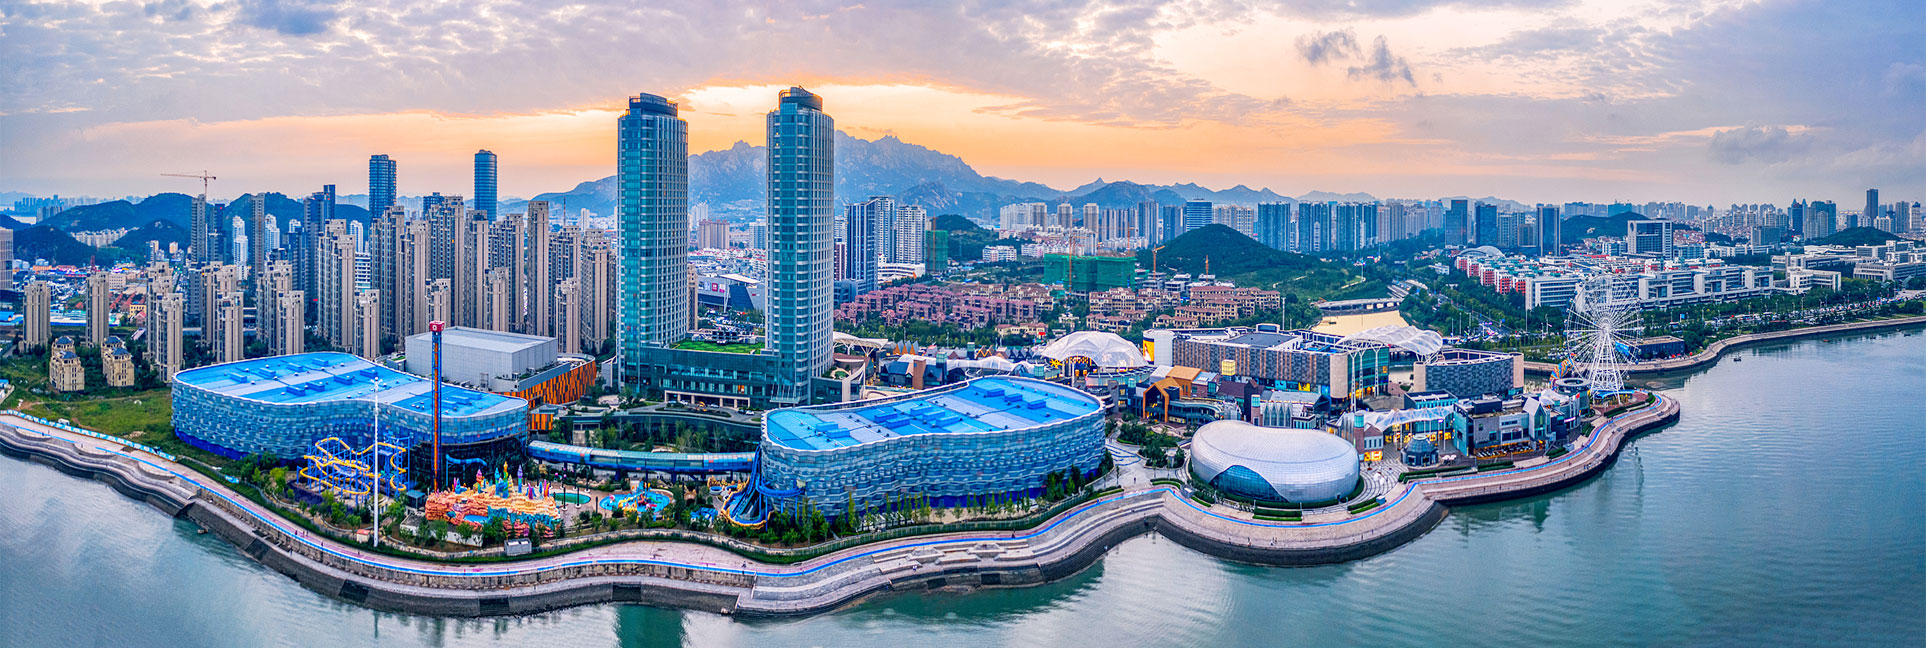 Qingdao West Coast New Area: A leading area for high-quality development